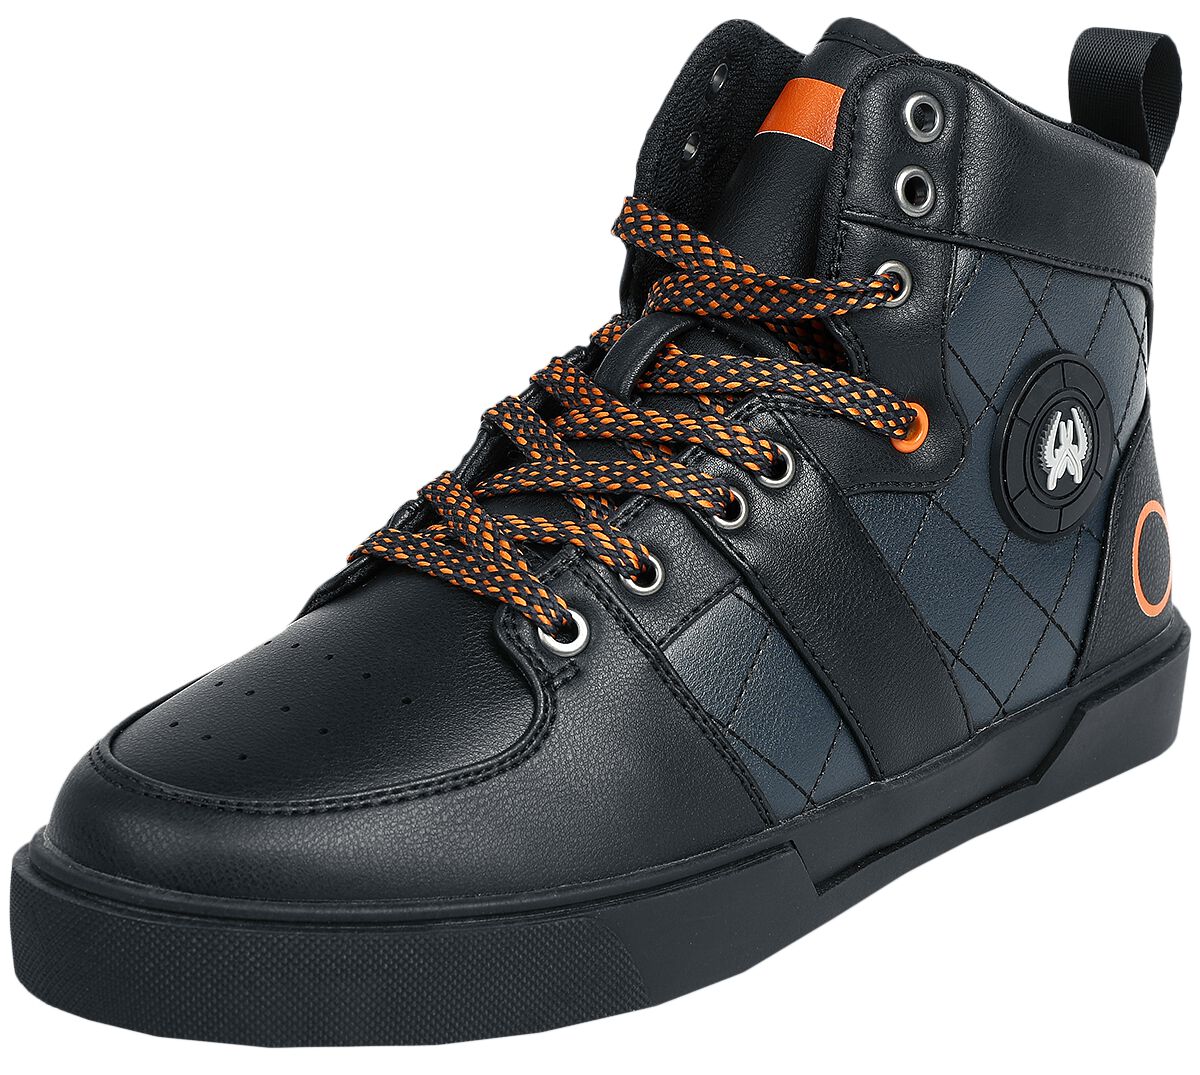 Counter-Strike - Gaming Sneaker high - Global Offensive - CS:GO - EU37 bis EU44 - Größe EU44 - schwarz/blau  - EMP exklusives Merchandise!